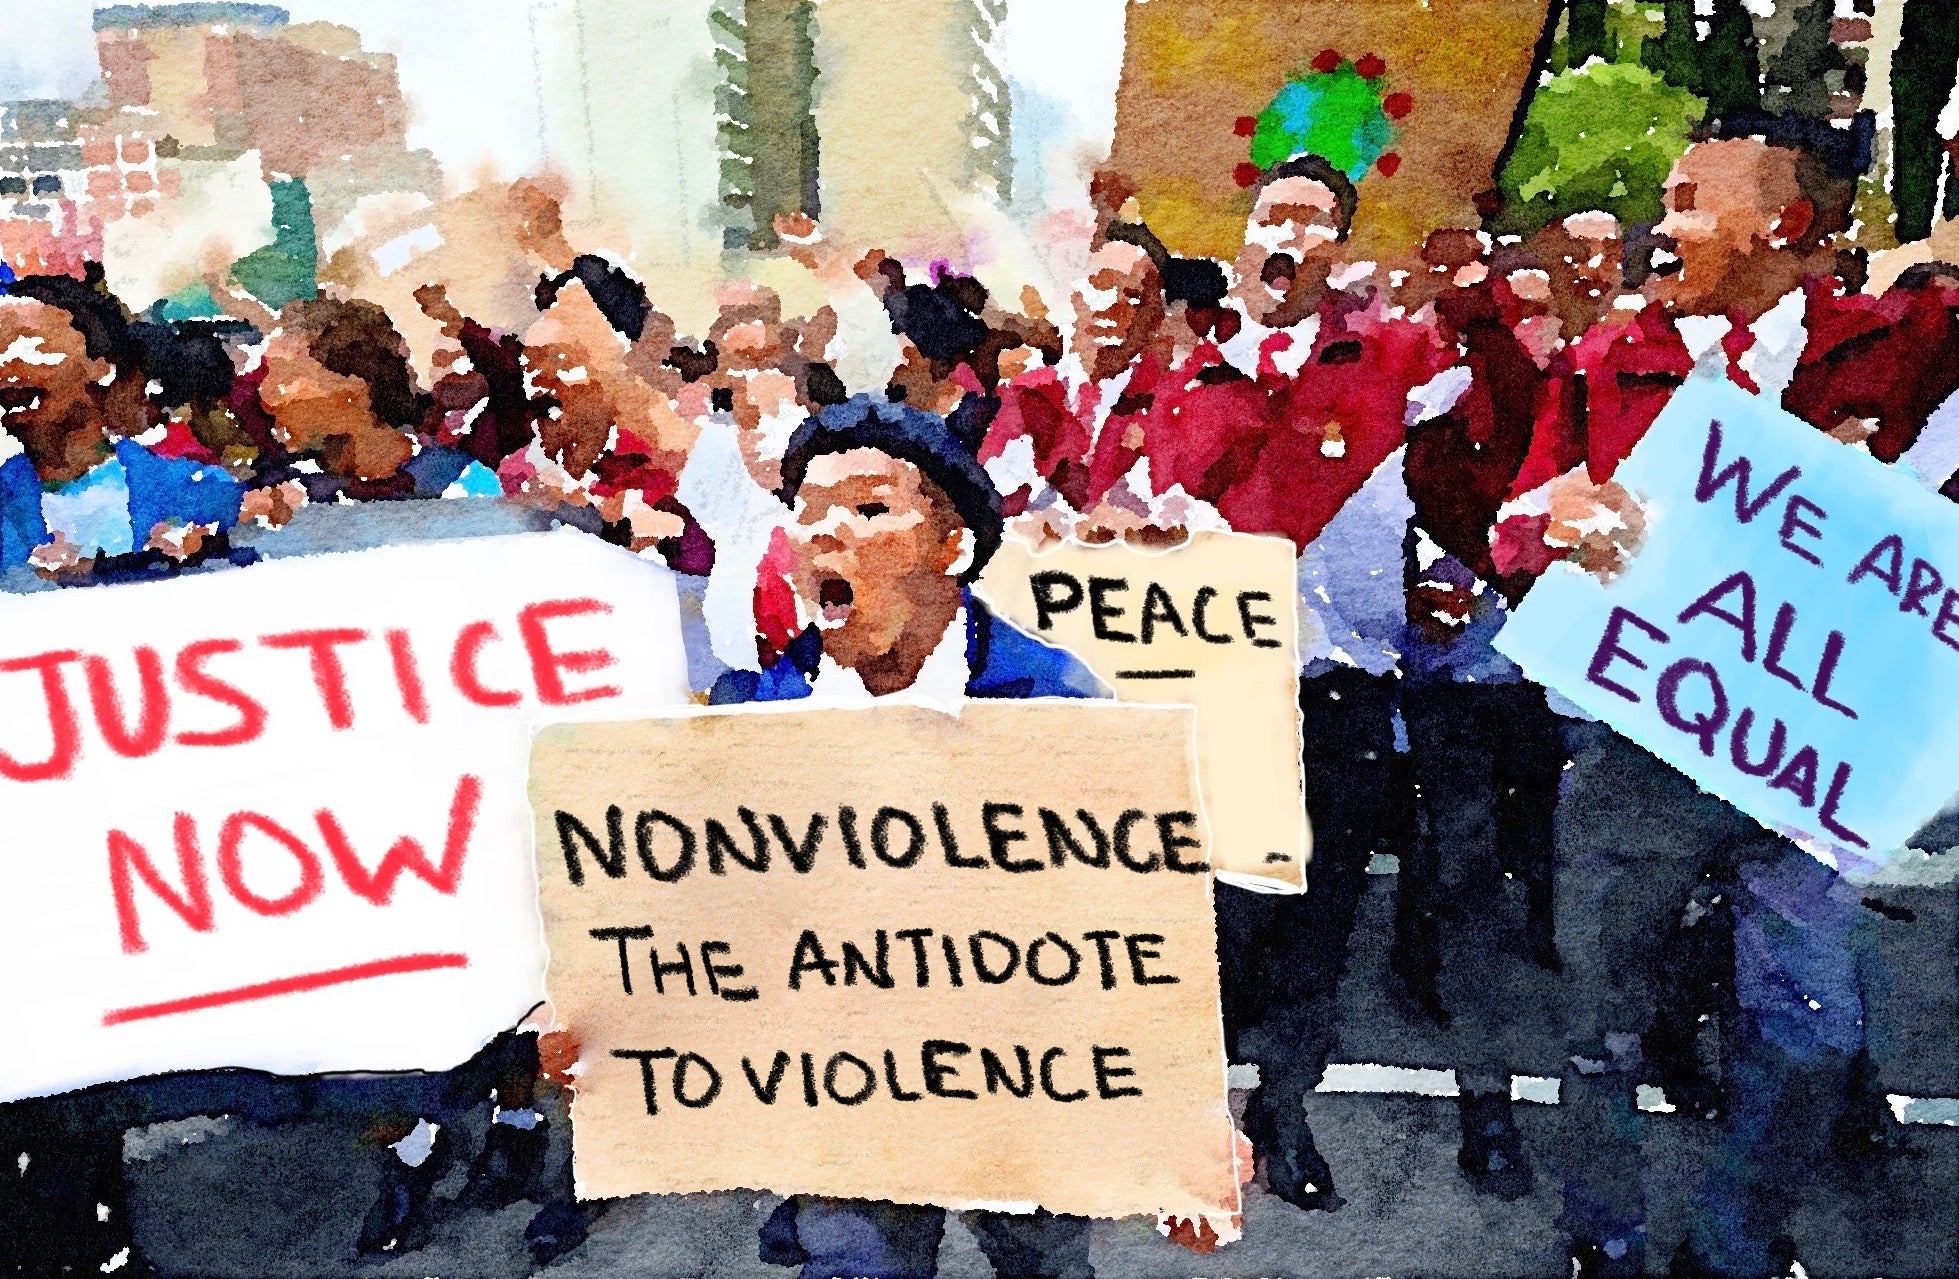 22nd Annual International Nonviolence Summer Institute 2021